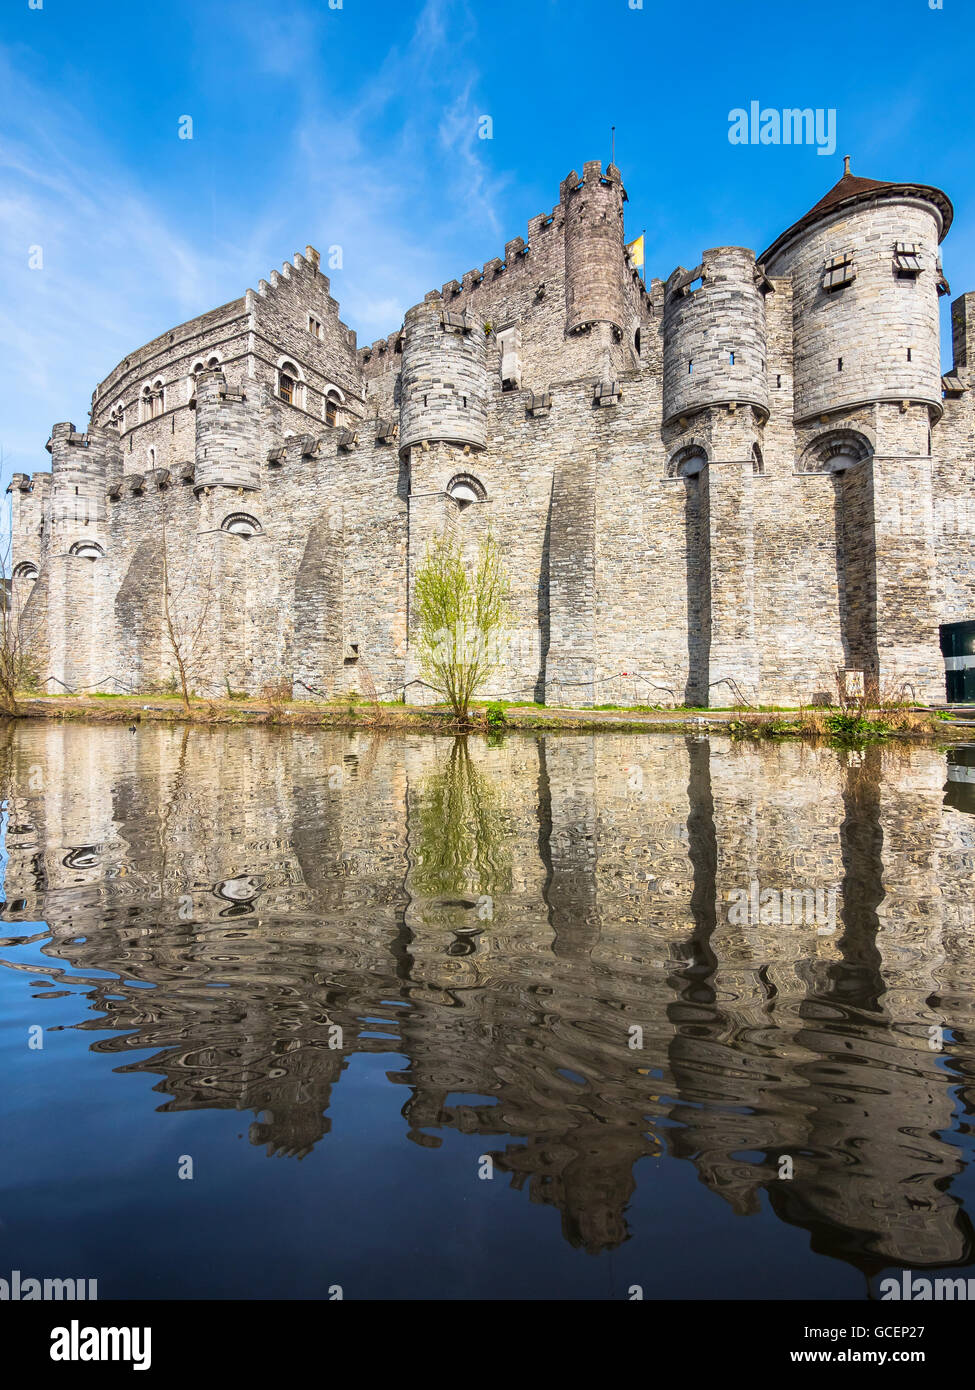 Medieval castle Gravensteen, River Leie, Ghent, Flanders, Belgium Stock Photo